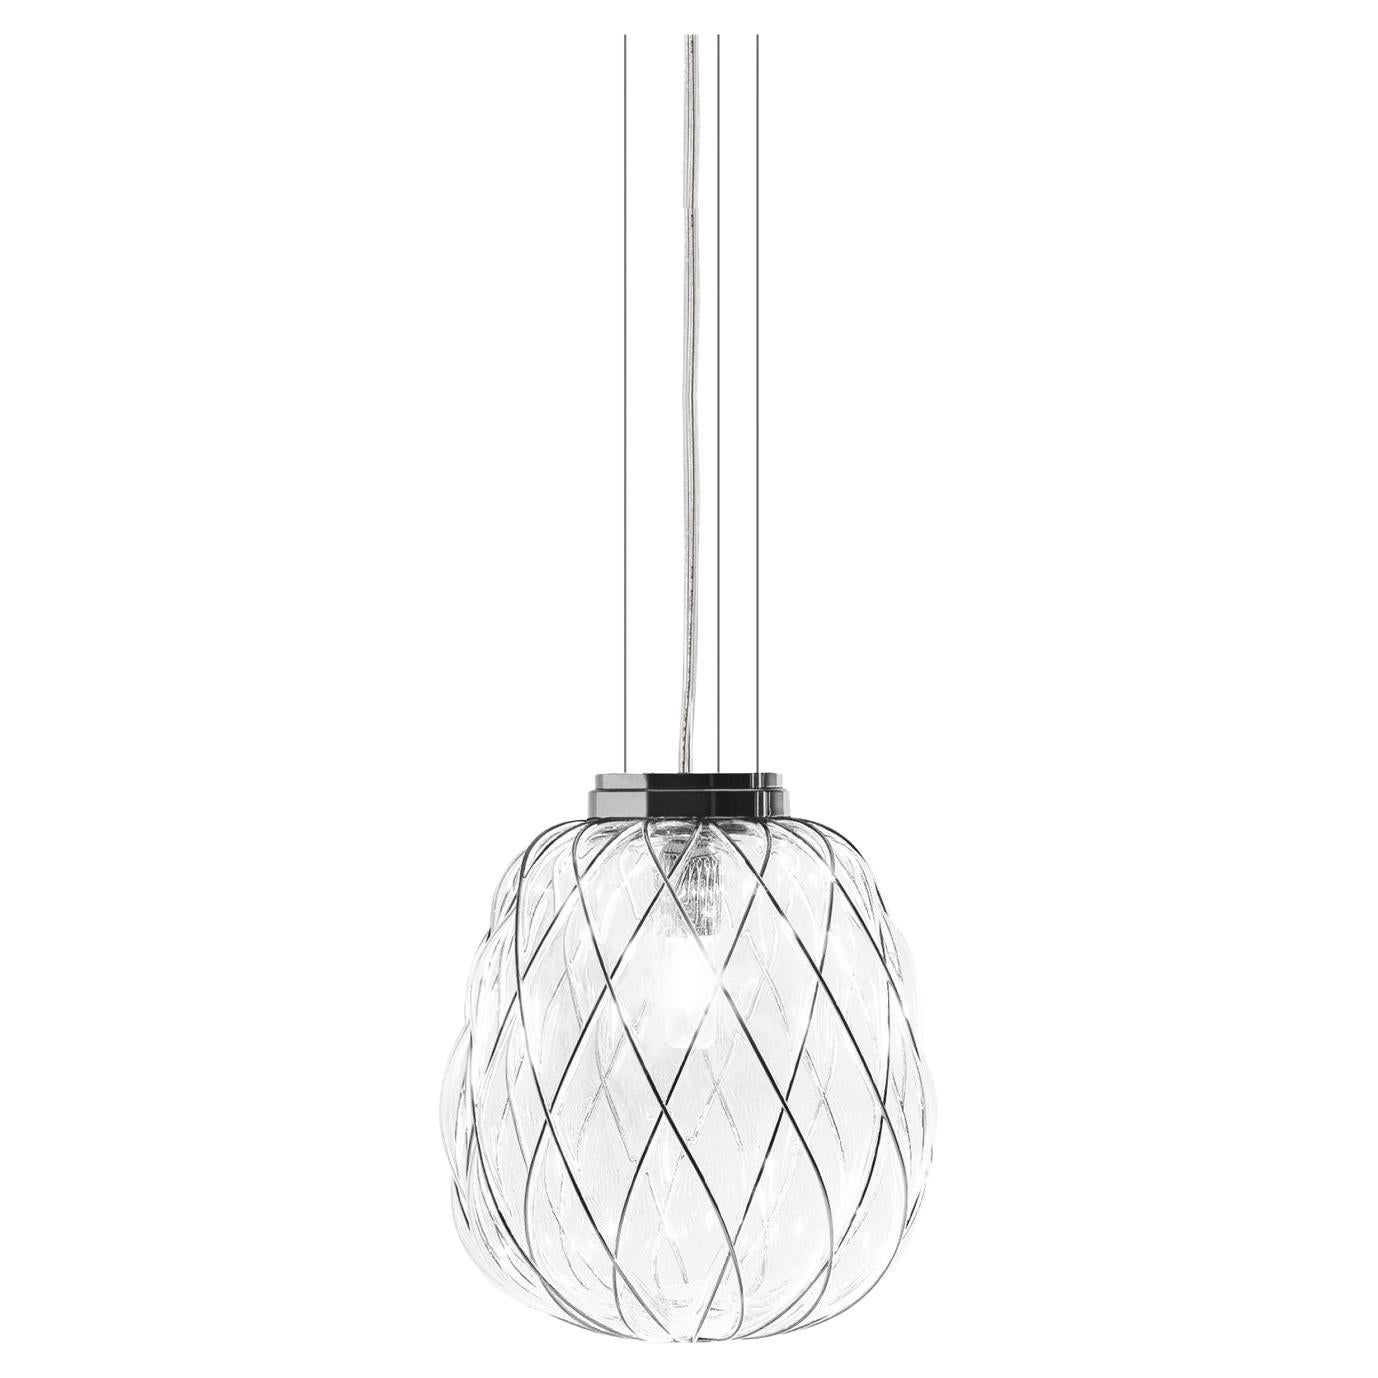 Fontana Arte "Pinecone" Blown Glass Pendant Lamp Designed by Paola Navone